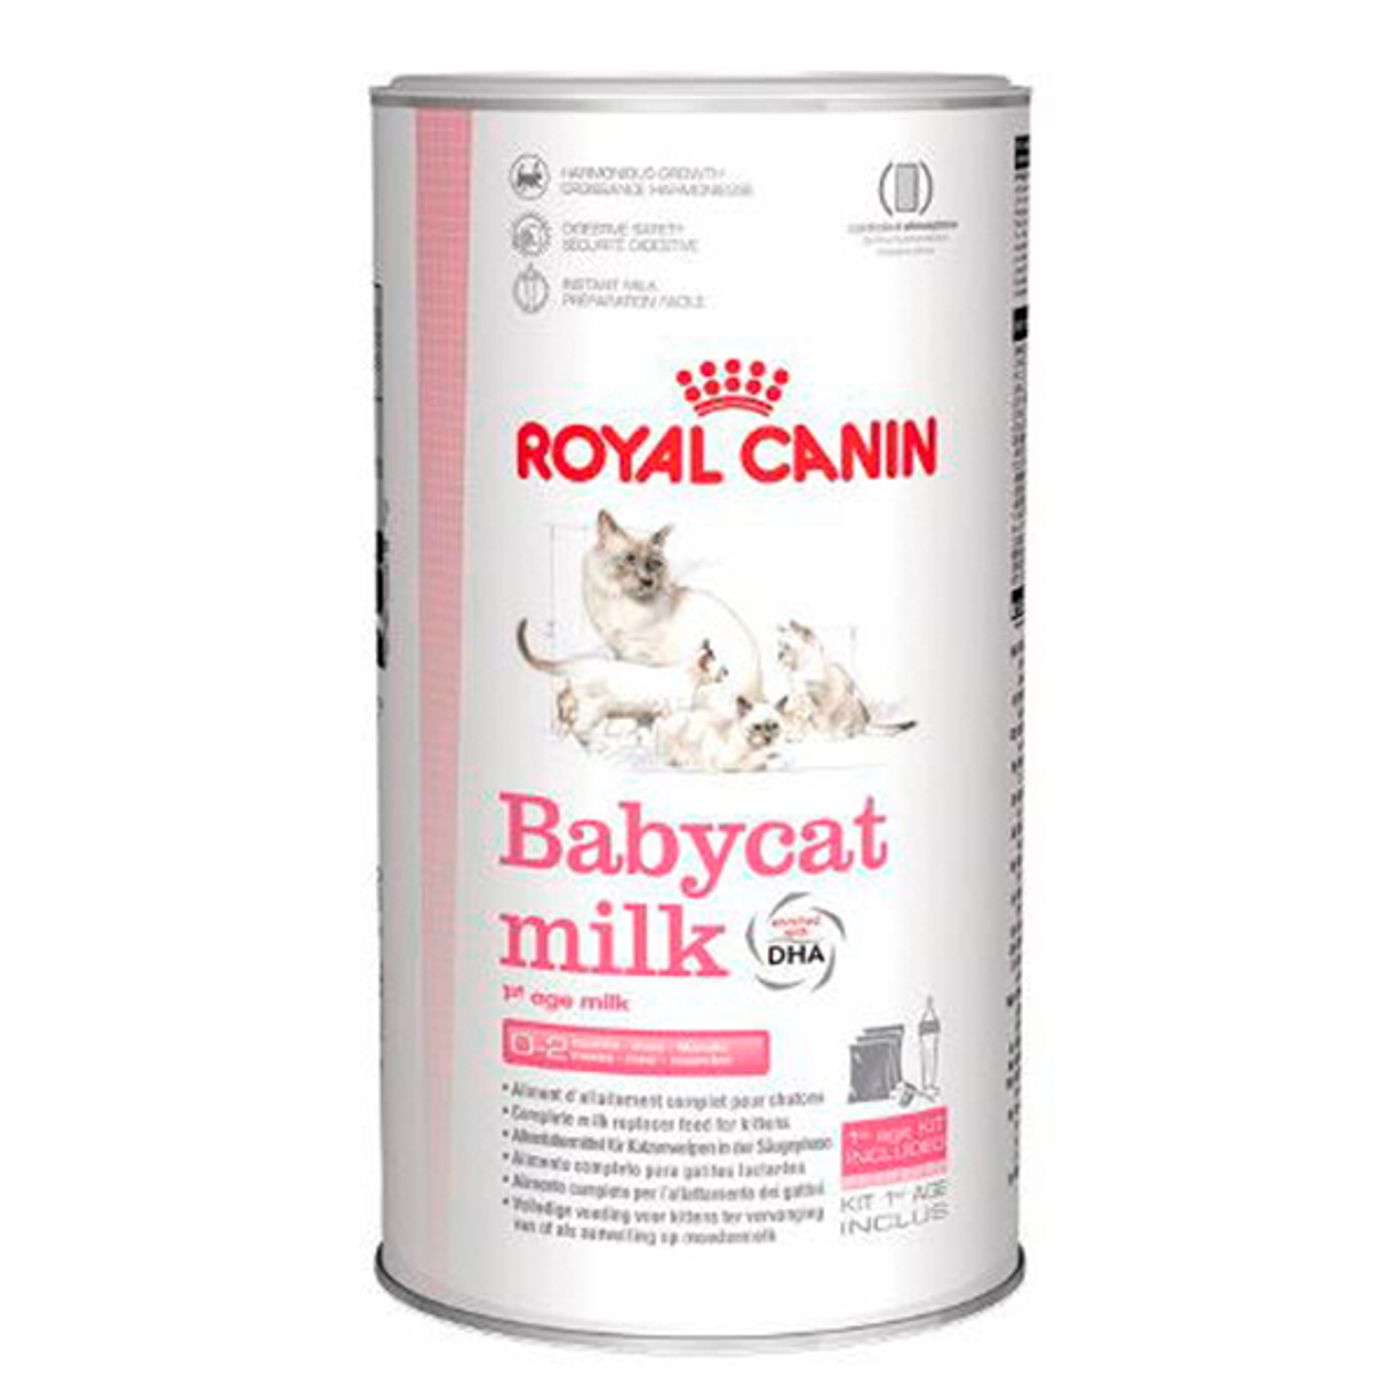 Royal-Canin-Babycat-Milk-300-g